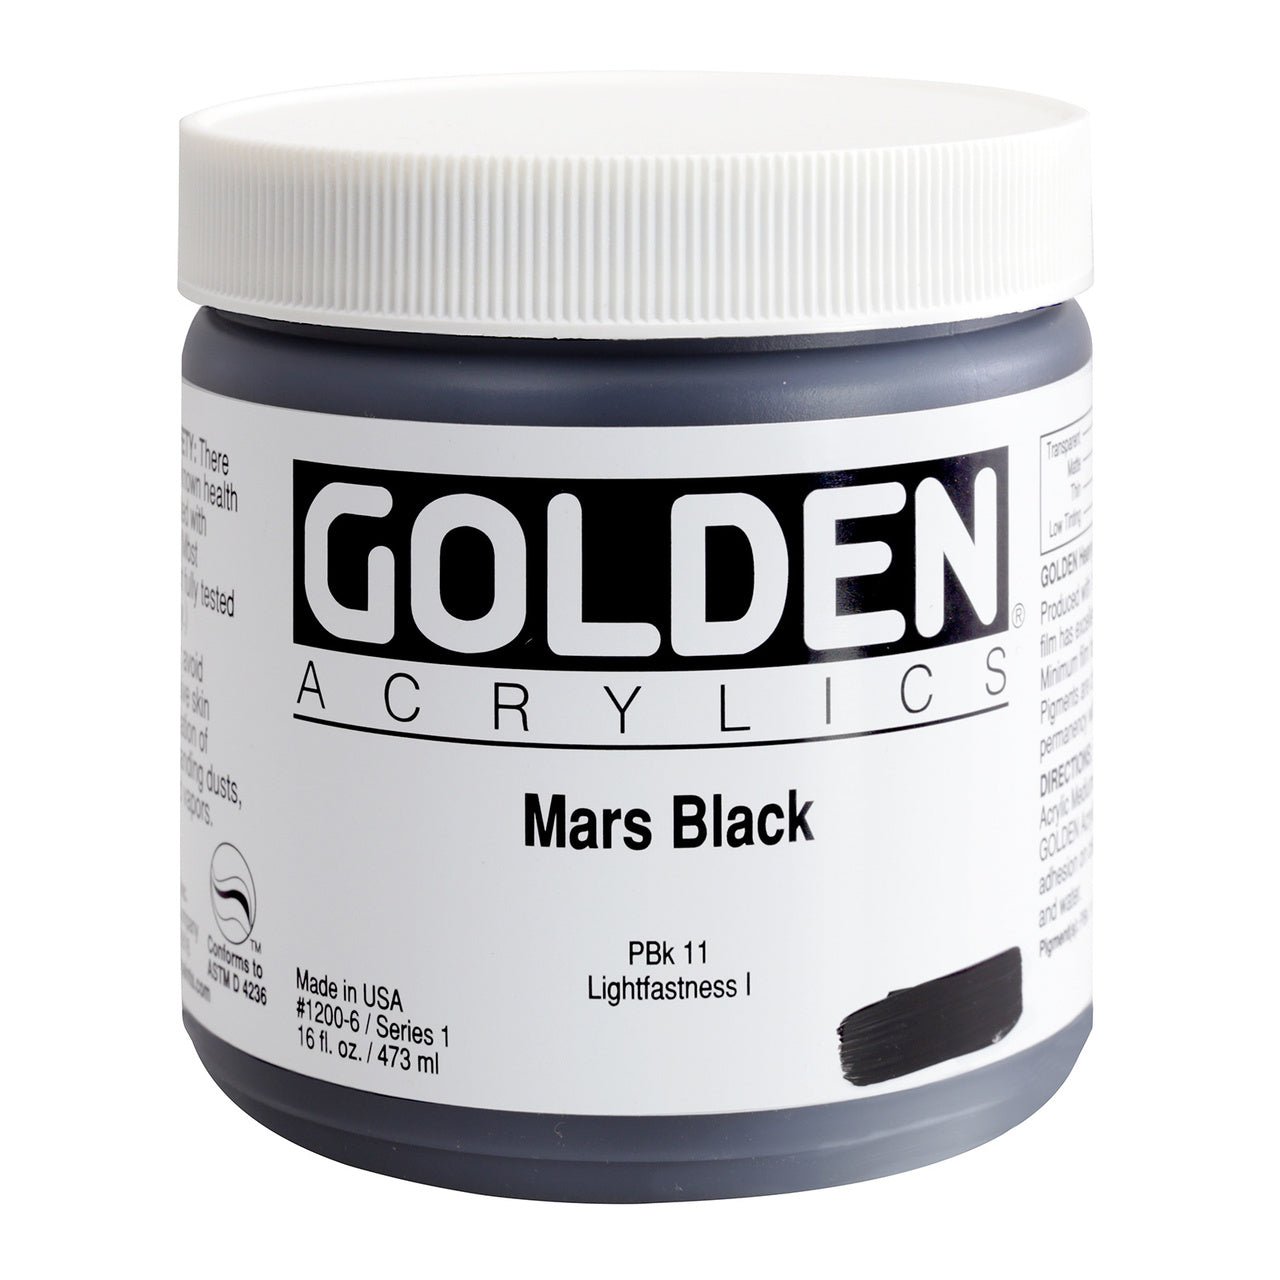 Golden Heavy Body Acrylic Mars Black 16 oz - merriartist.com